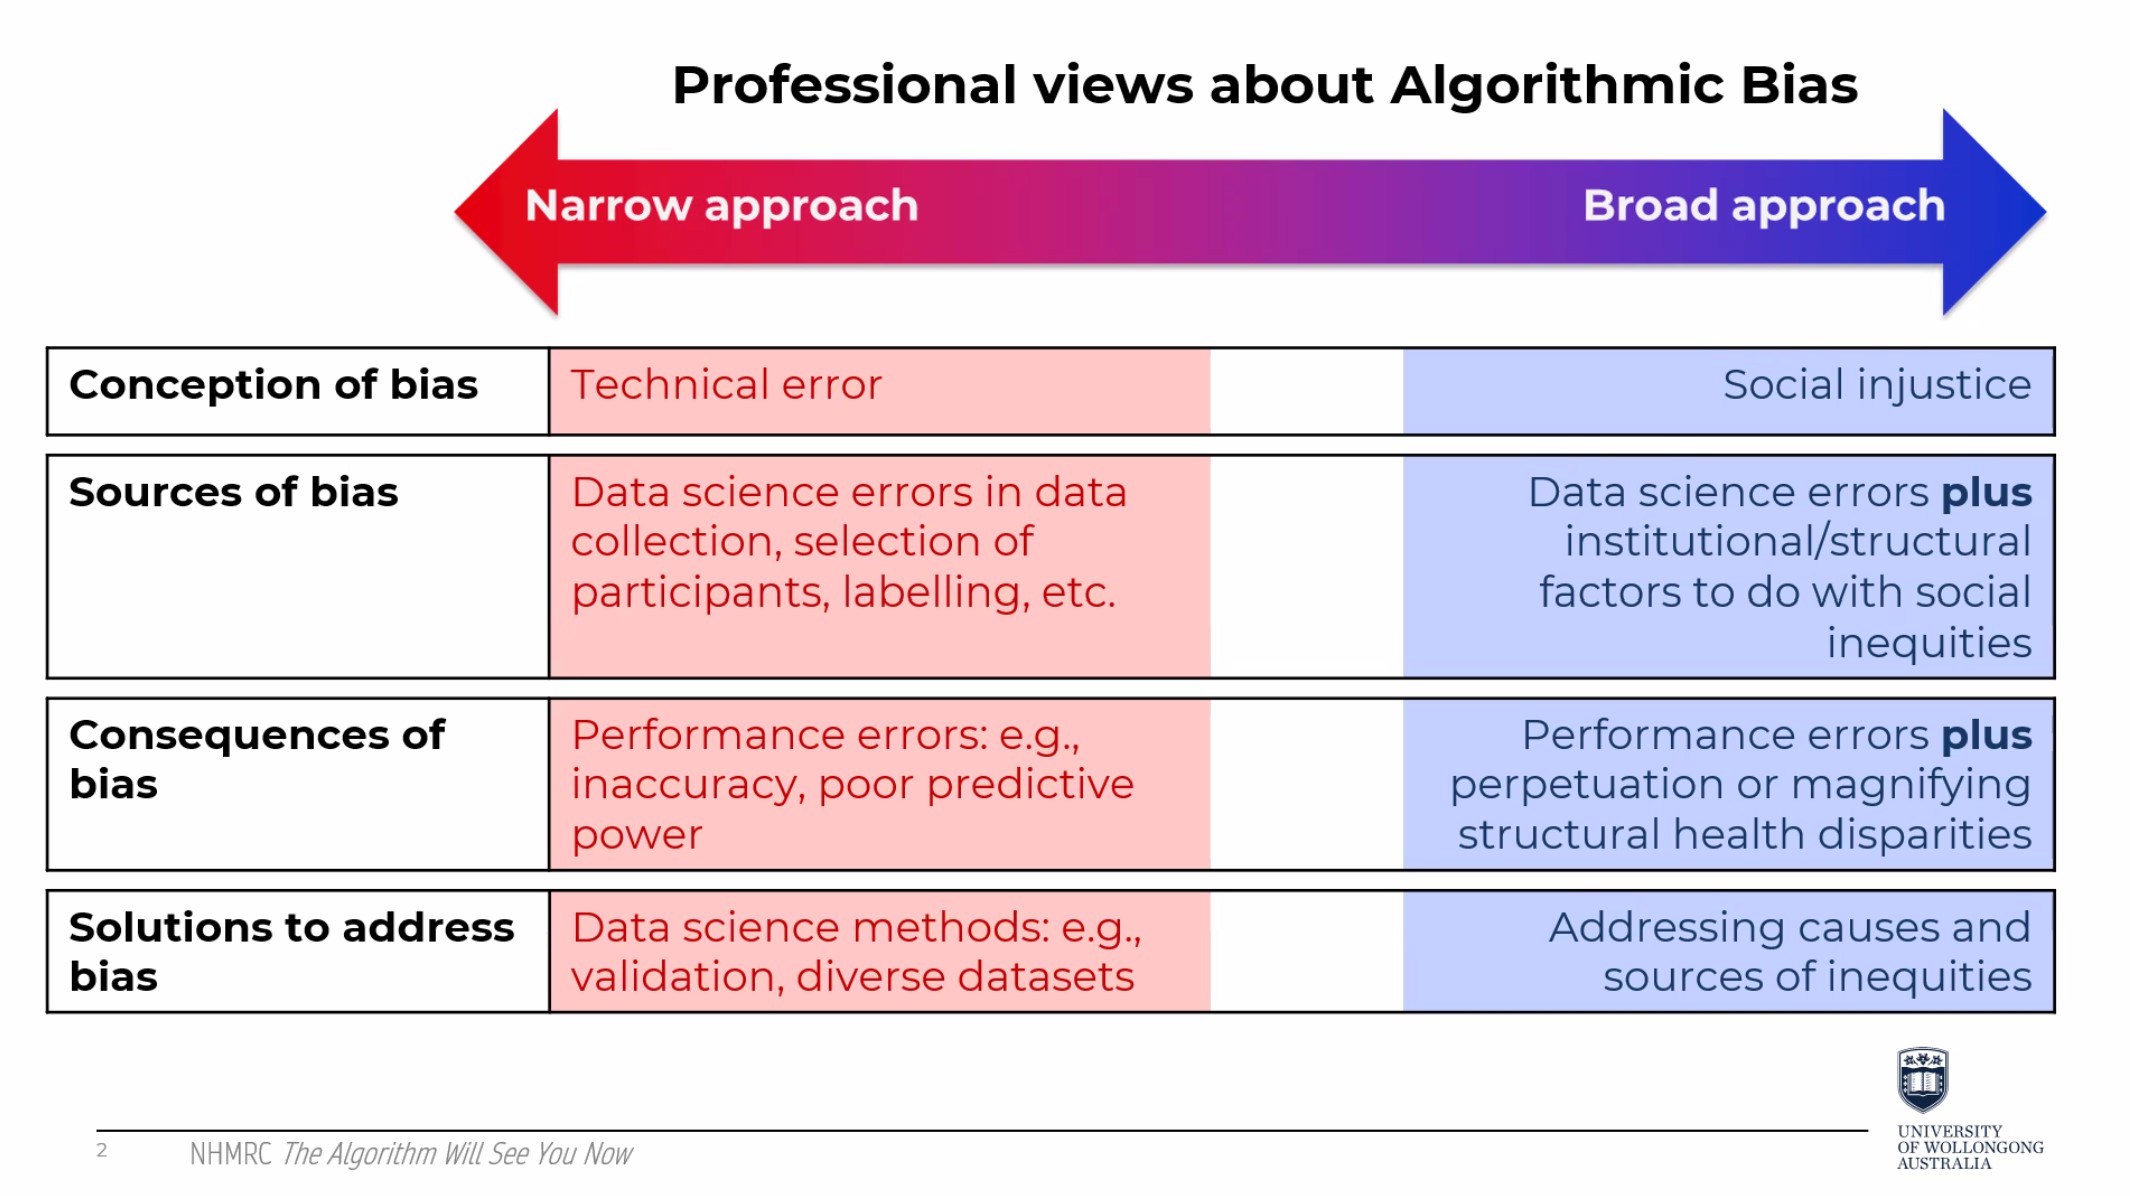 The differences between narrow vs broad undersatndings of algorithmic bias.